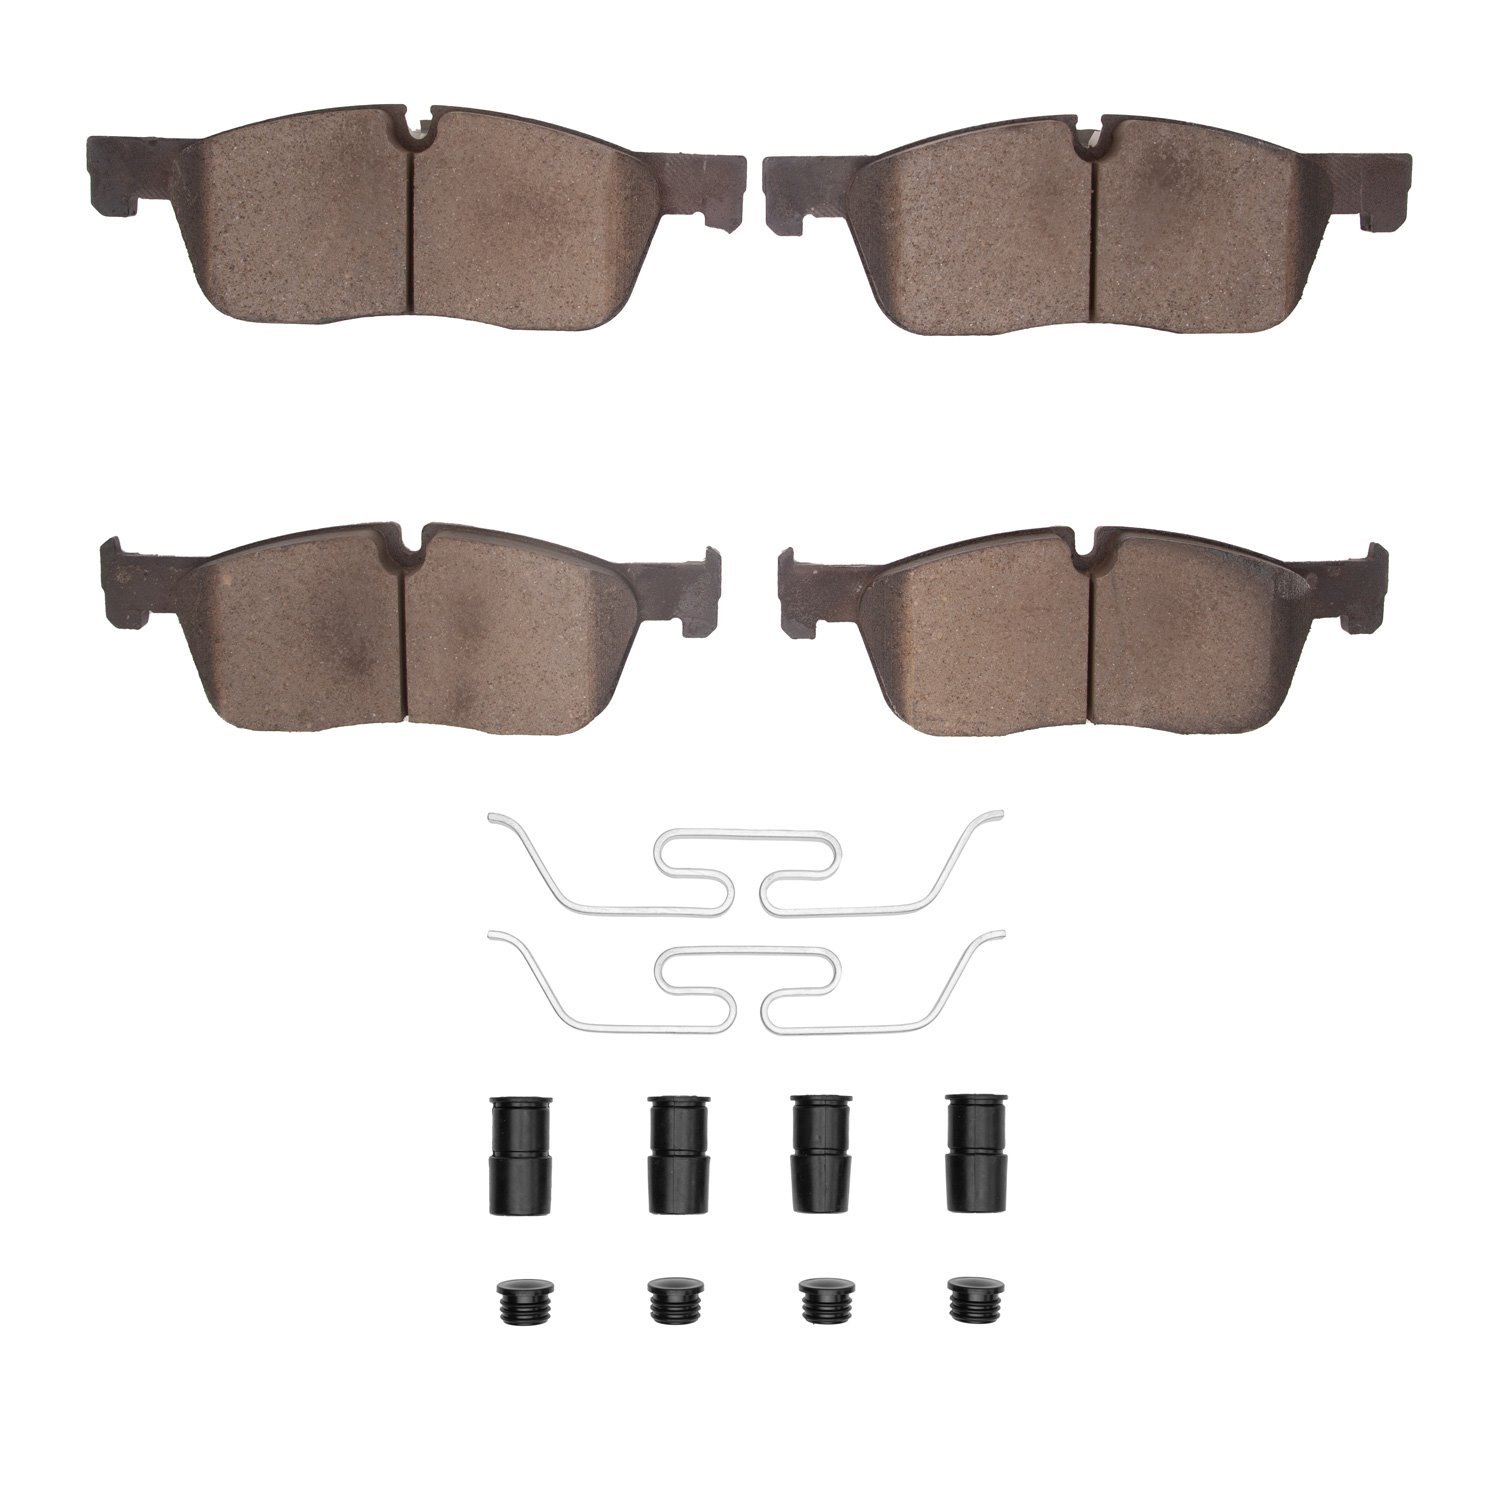 1600-1838-01 5000 Euro Ceramic Brake Pads & Hardware Kit, 2015-2019 Multiple Makes/Models, Position: Front